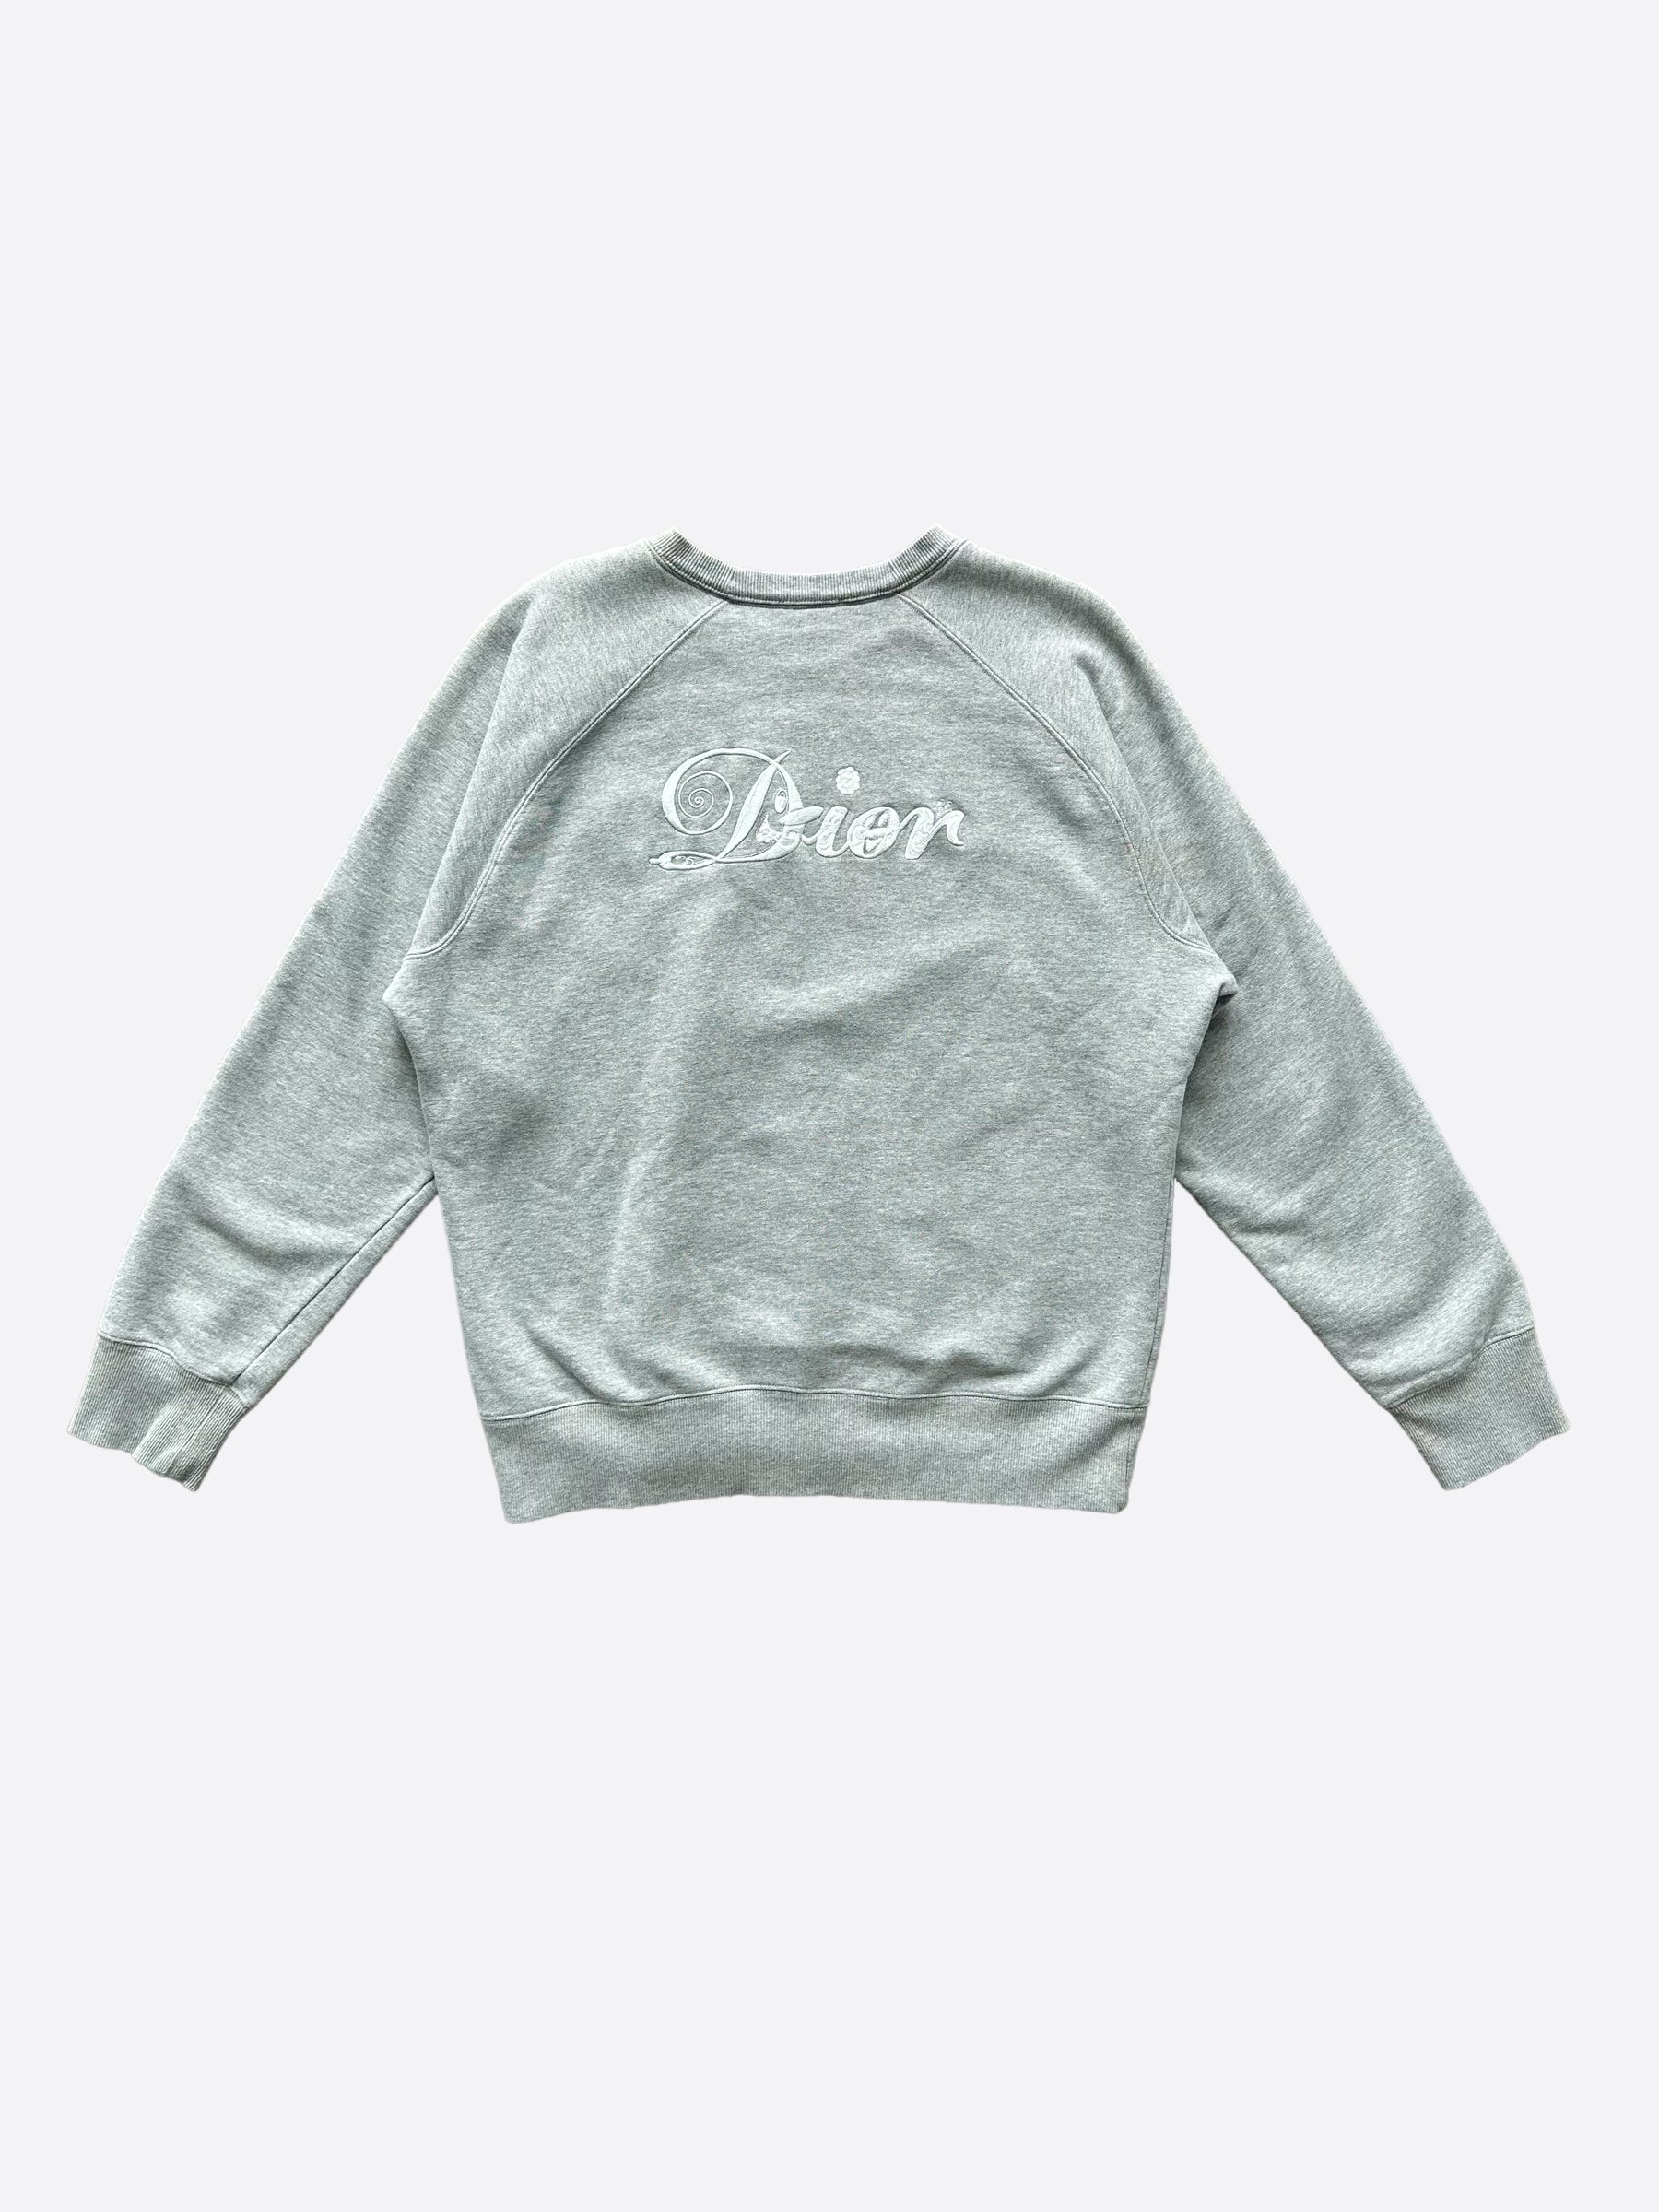 Dior Kenny Scharf Grey Cards Sweater